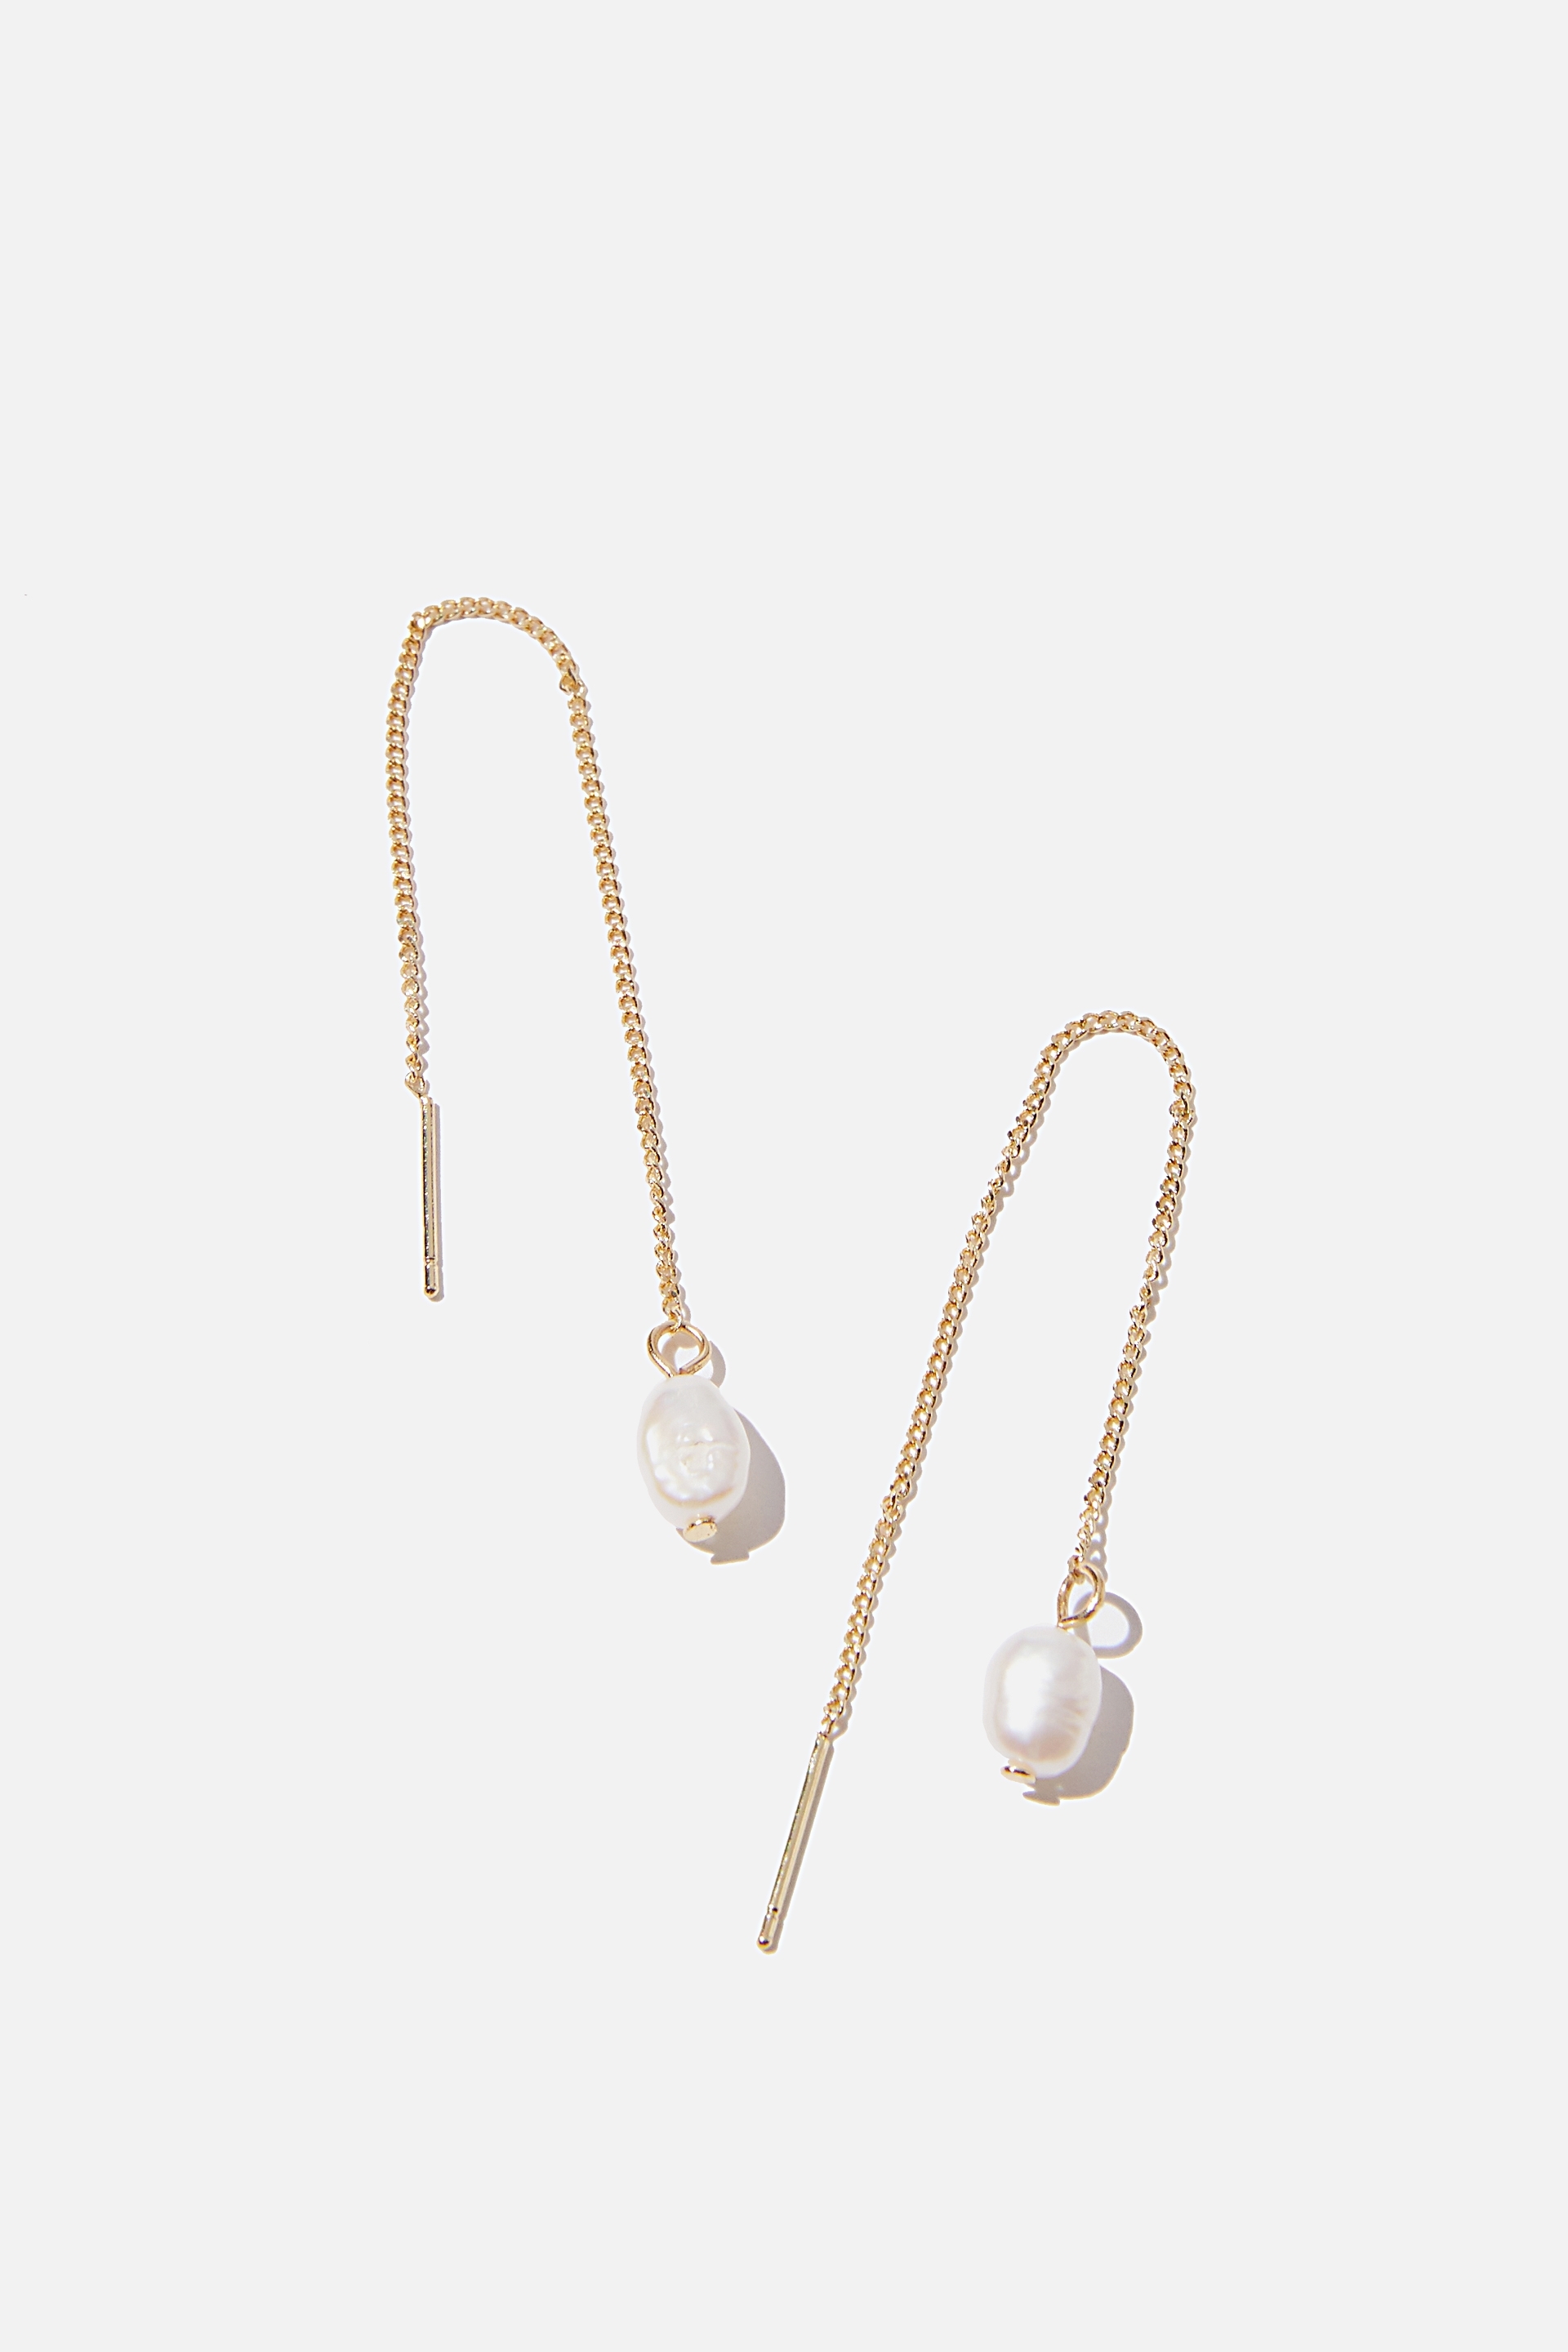 Rubi - Premium Drop Earring - Gold plated thread pearl